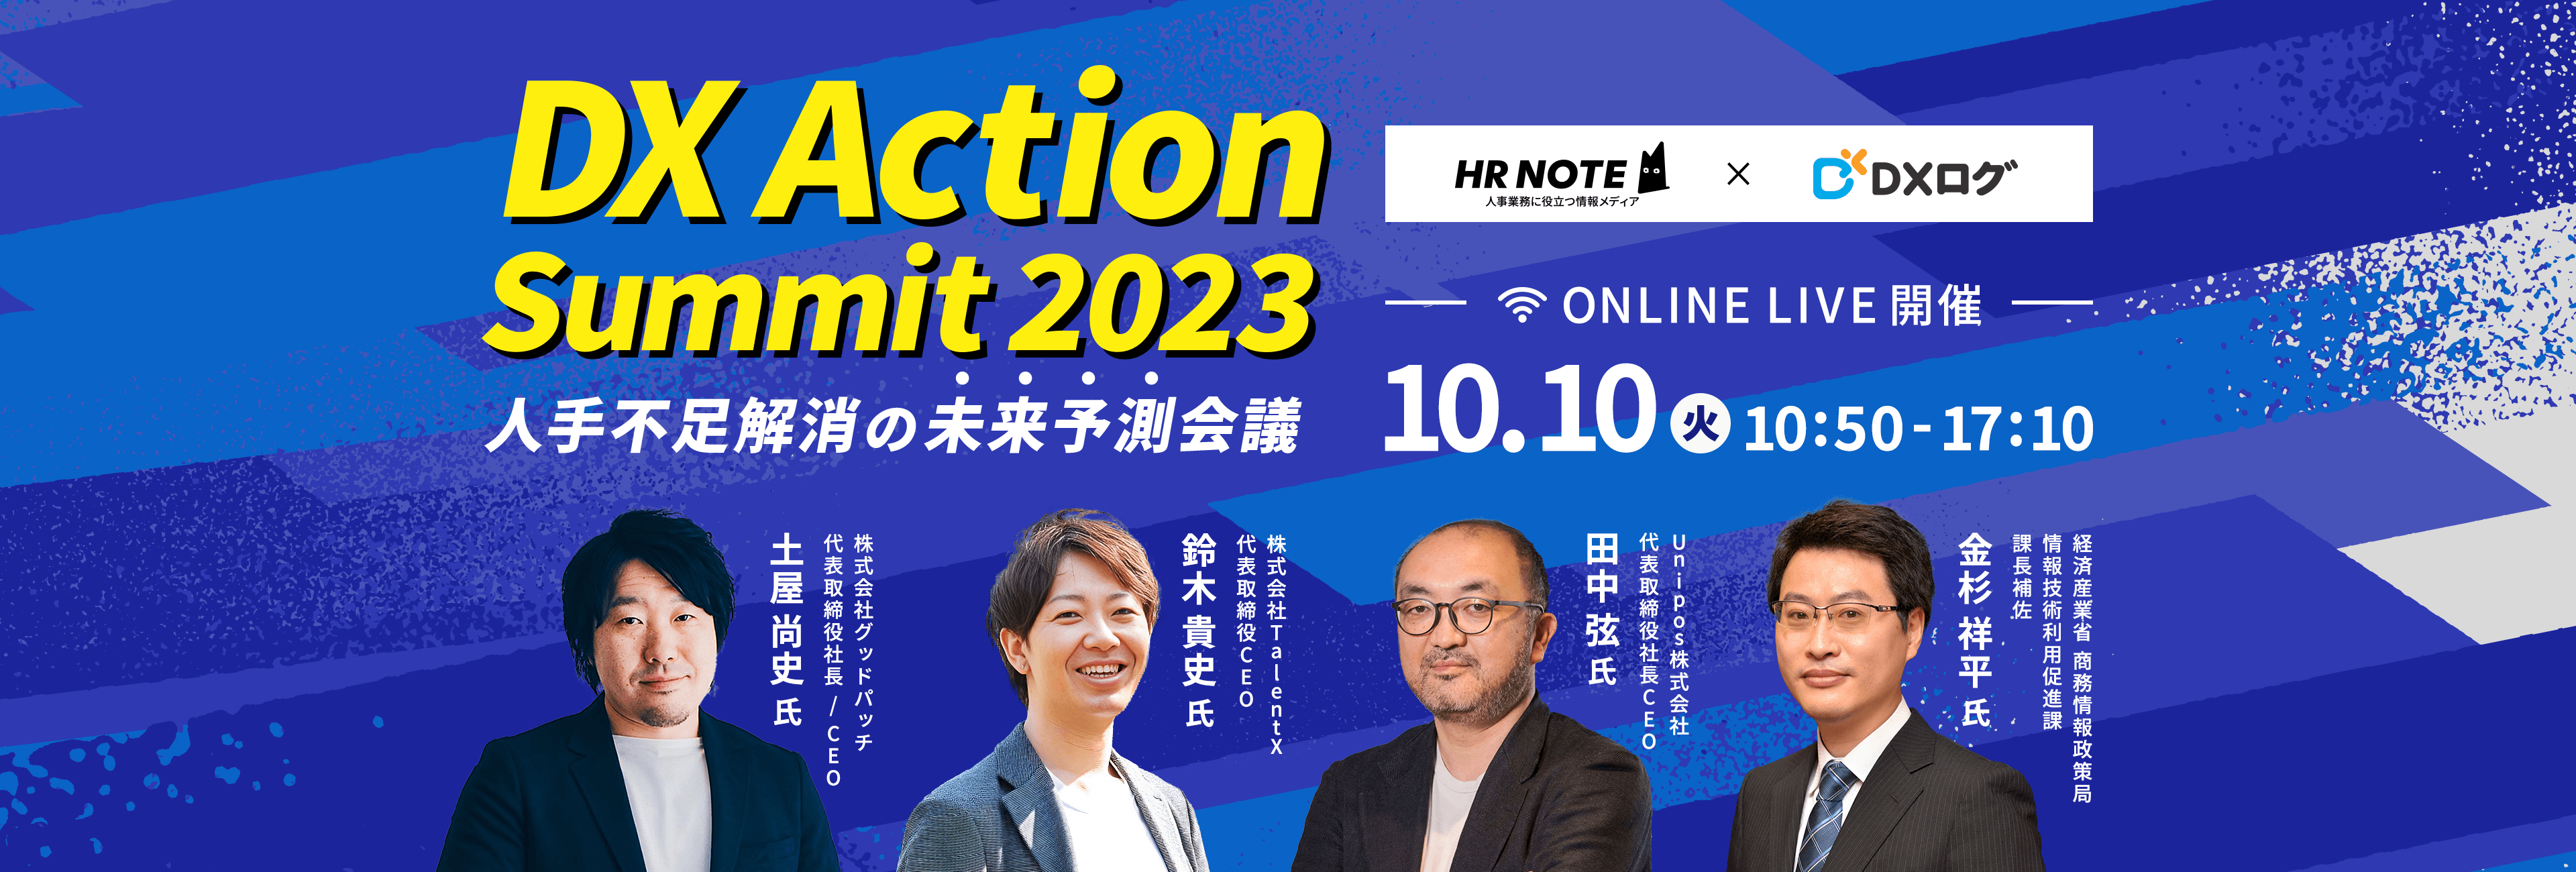 DX Action Summit 2023